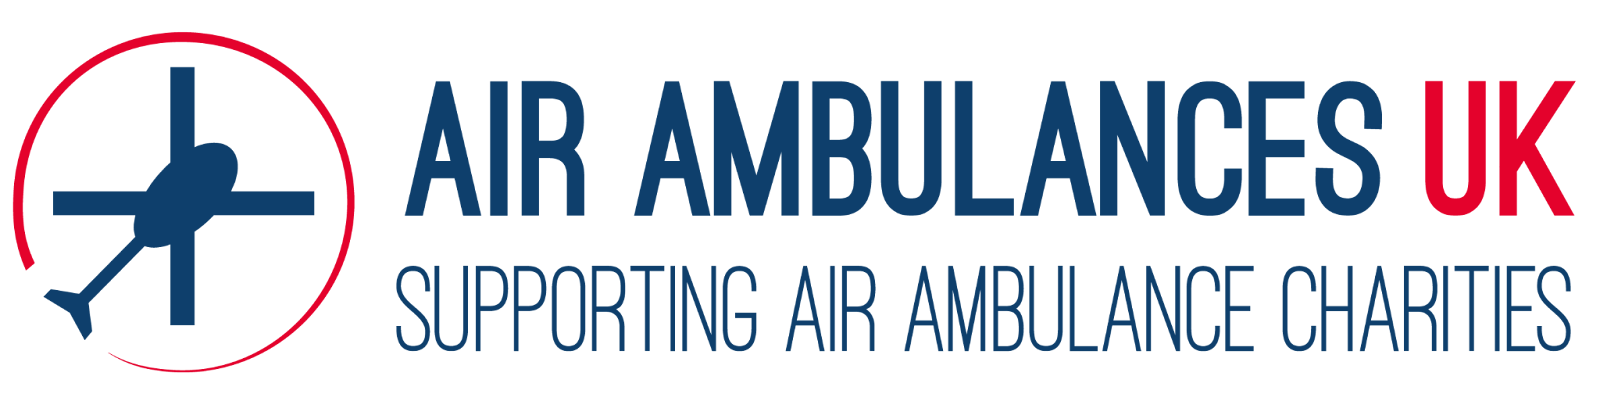 air ambulances uk logo